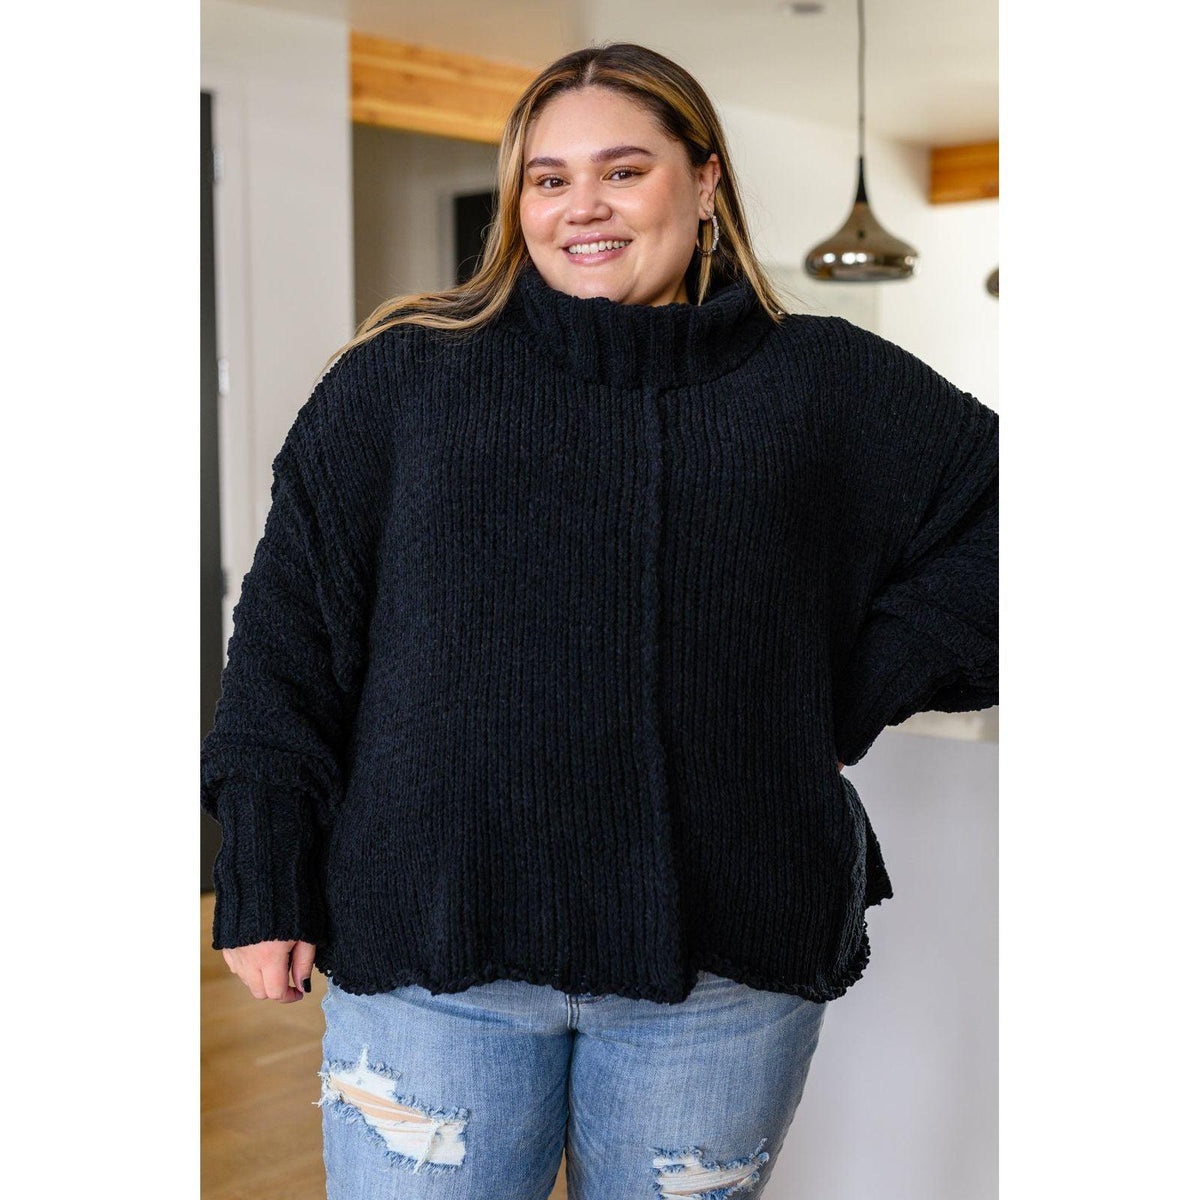 Maureen Long Sleeve Solid Knit Sweater - becauseofadi